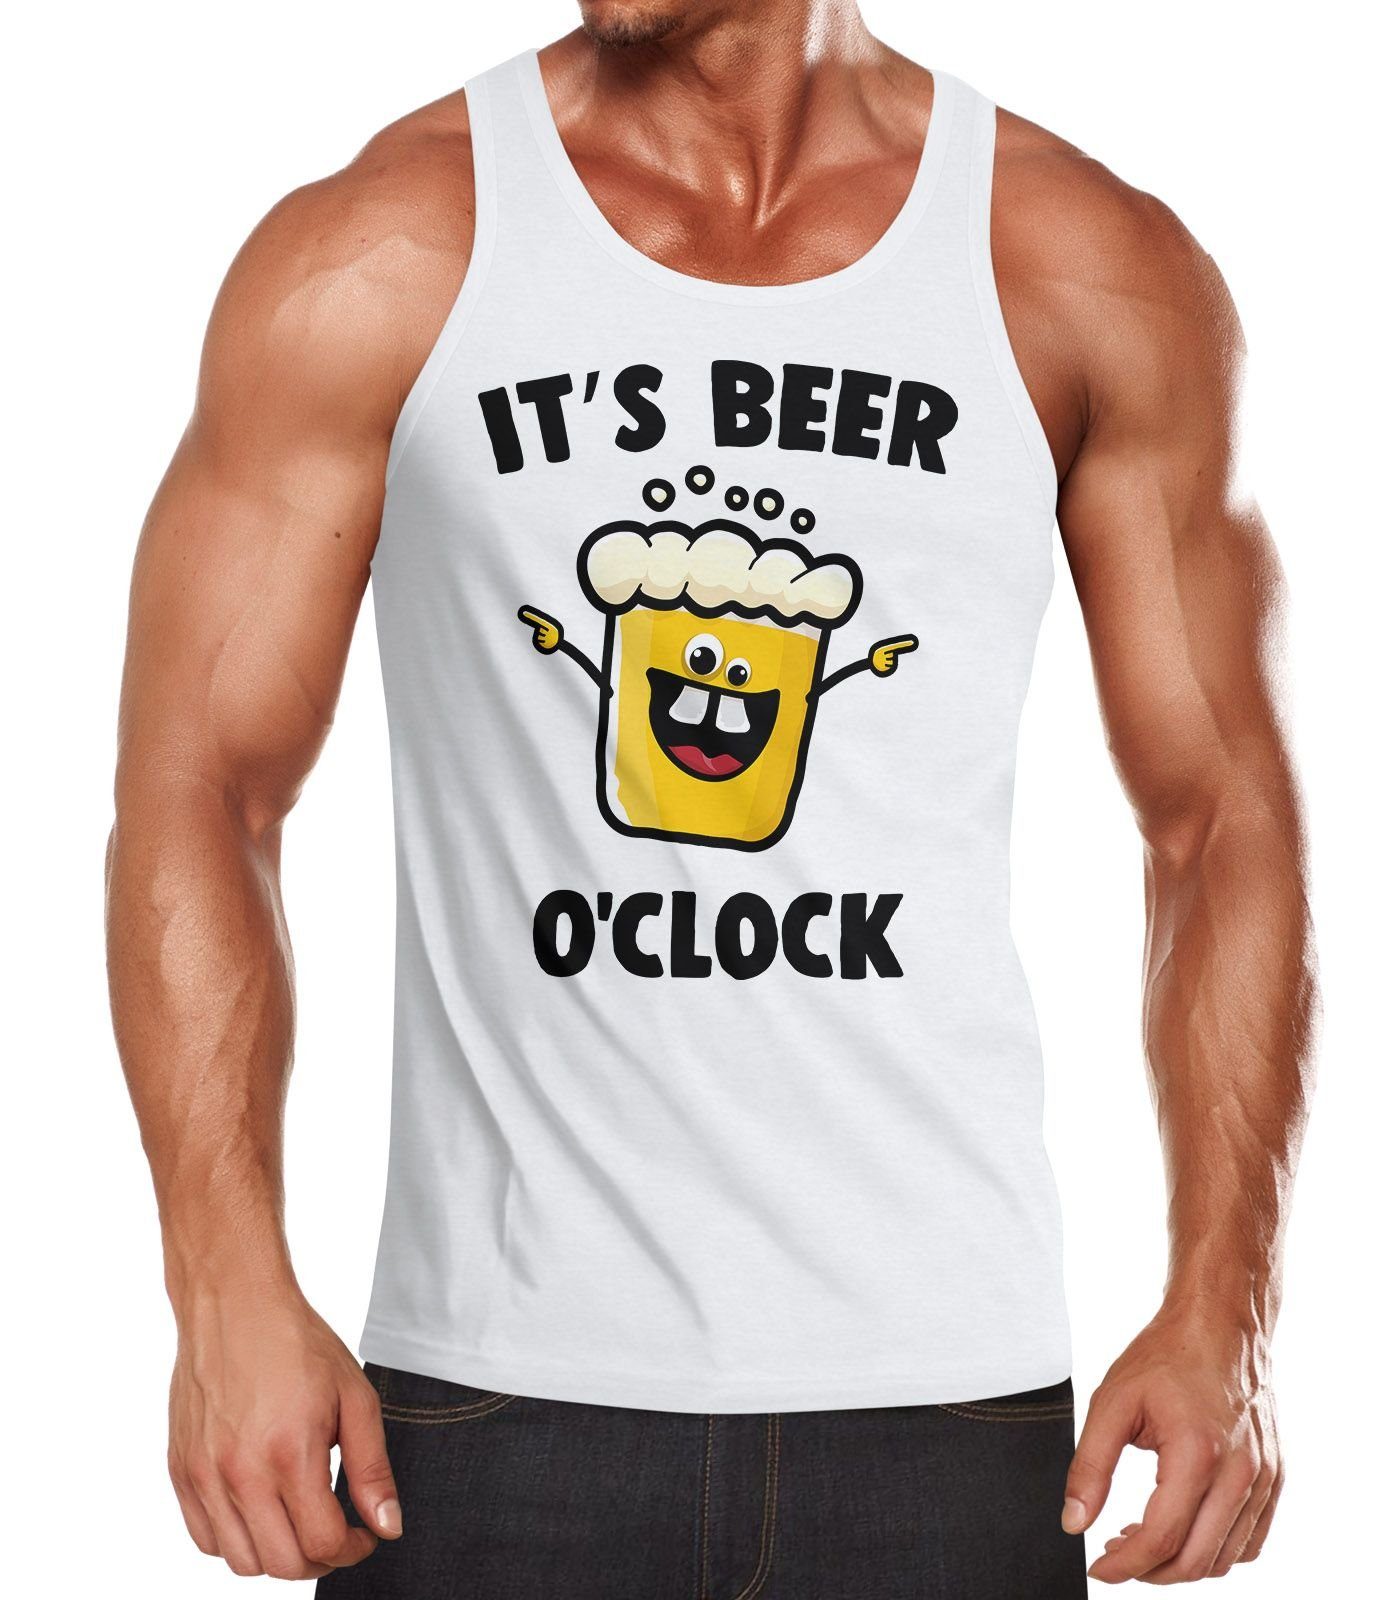 Lustiges Herren Tank-Top Shirt Bier Spruch-Motiv Moonworks® It's Beer a clock 